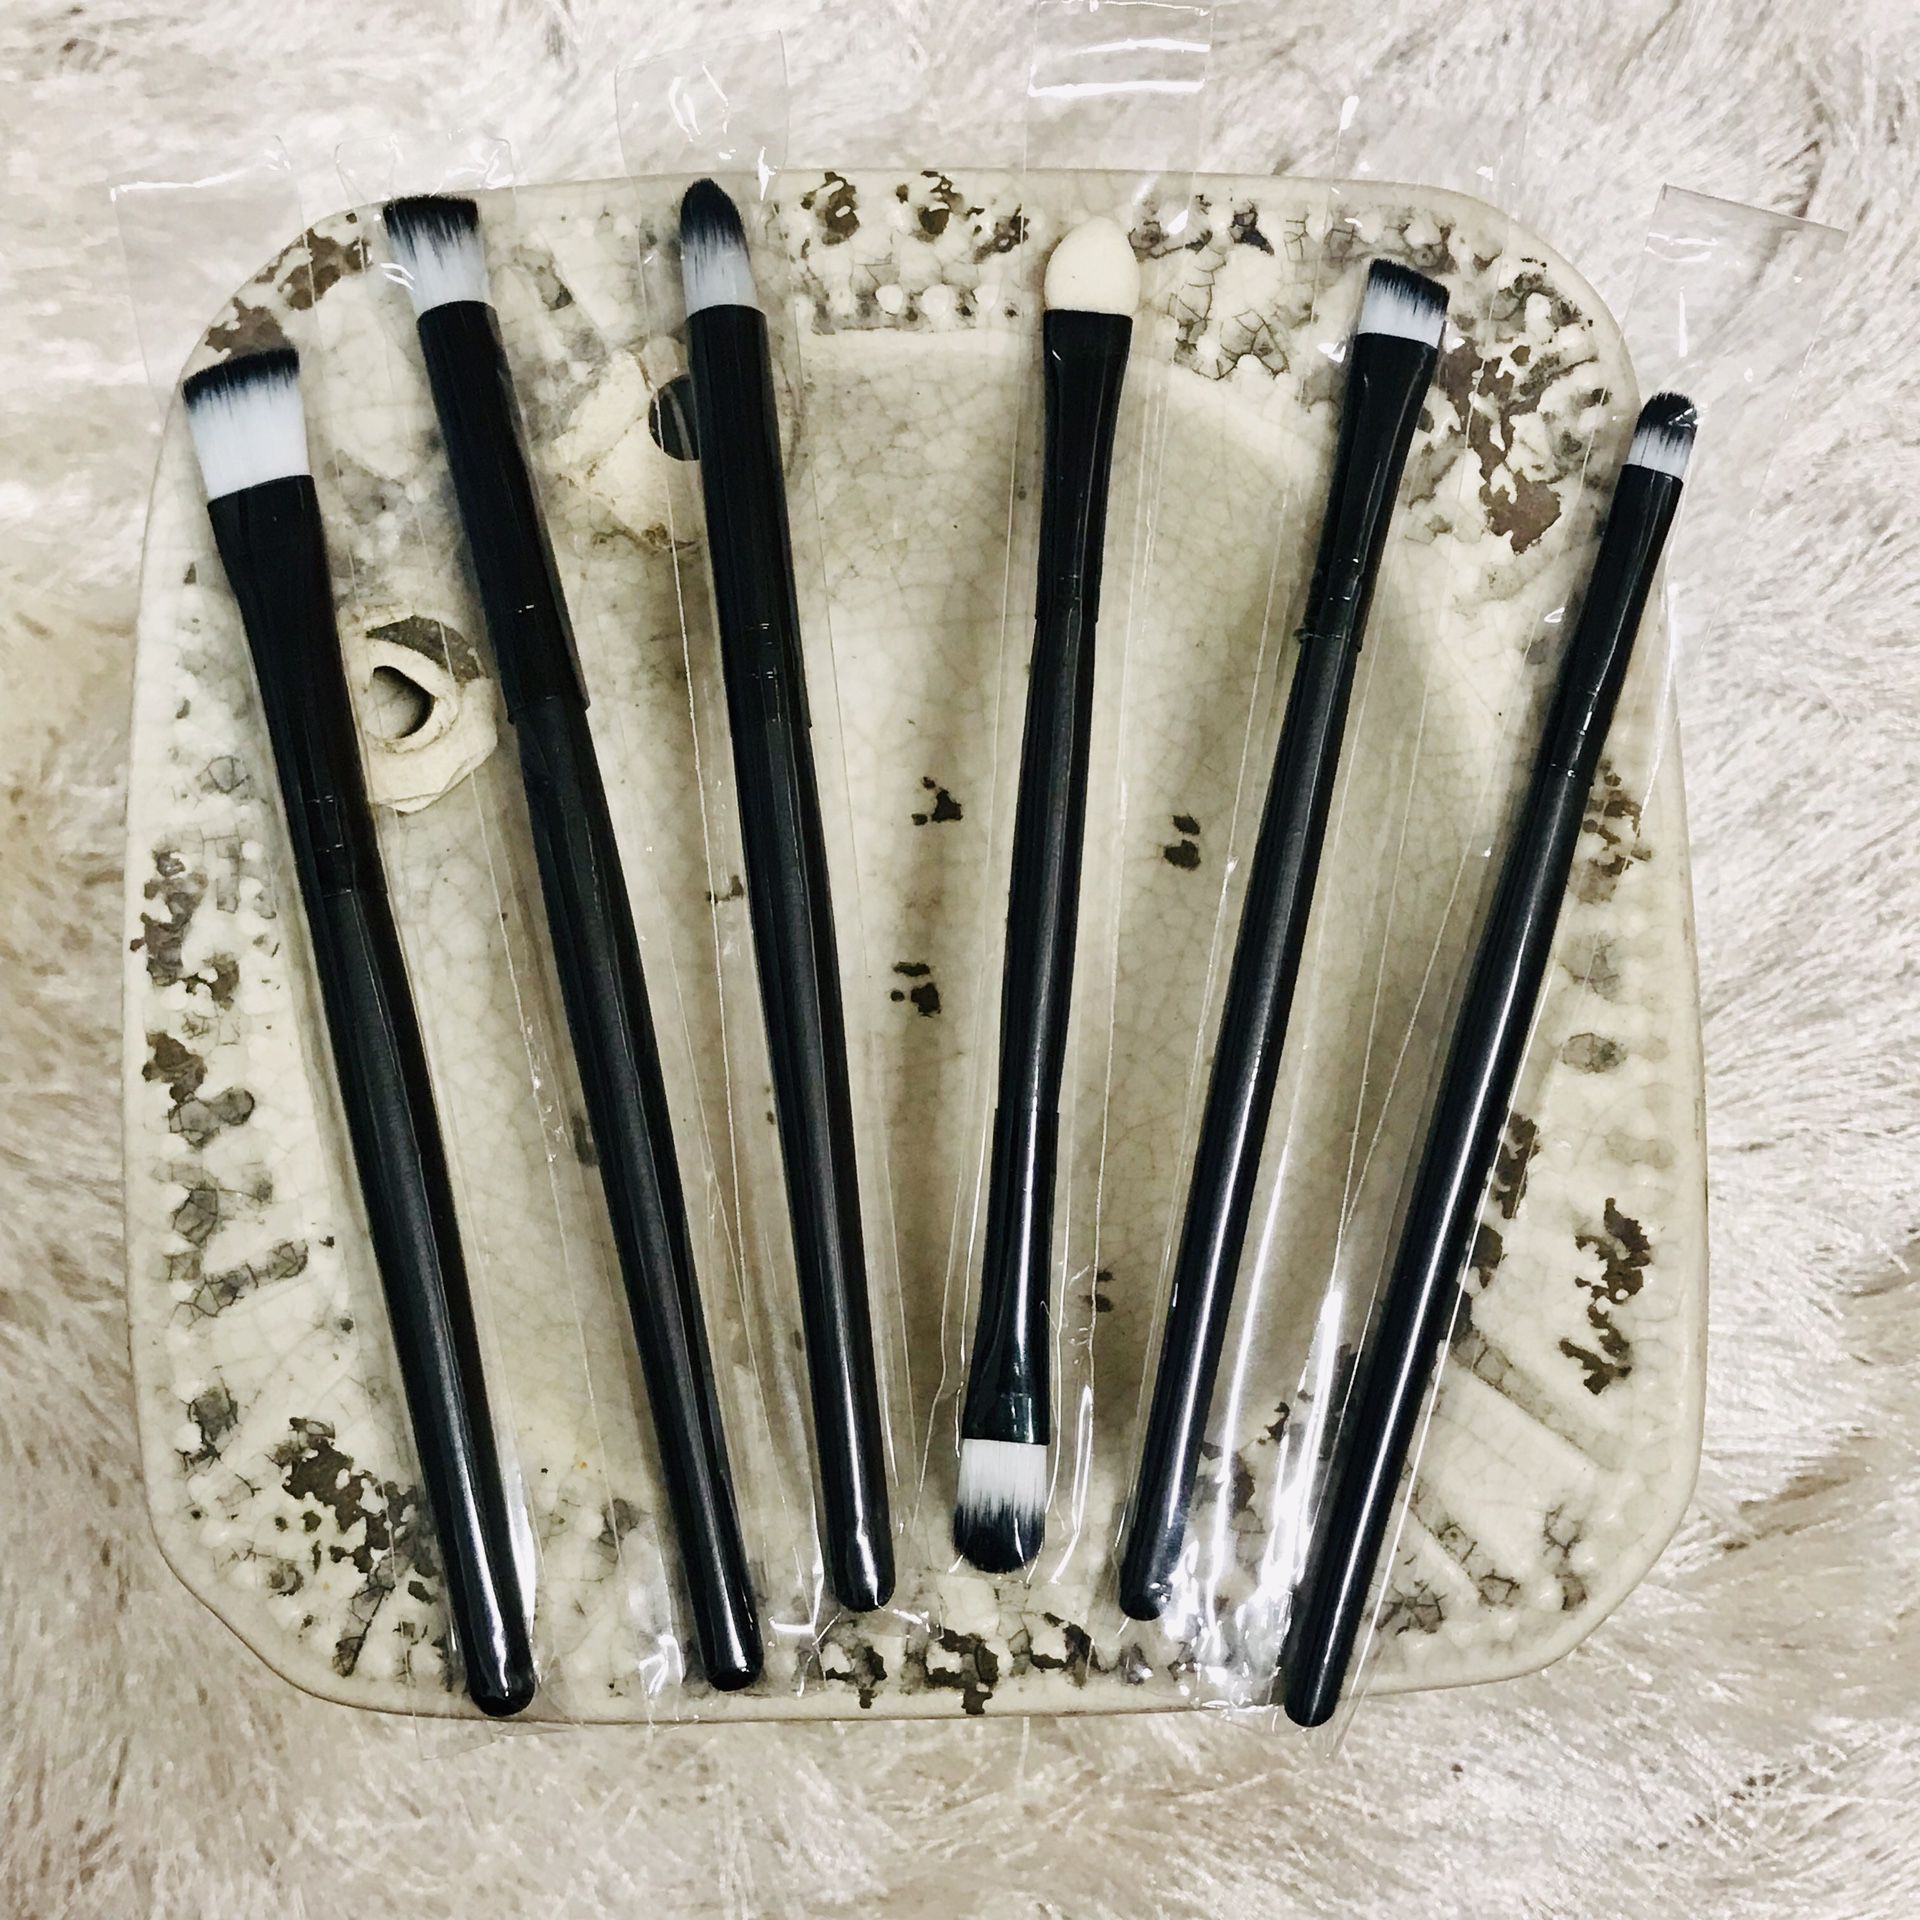 NEW Set of 7 black makeup brushes